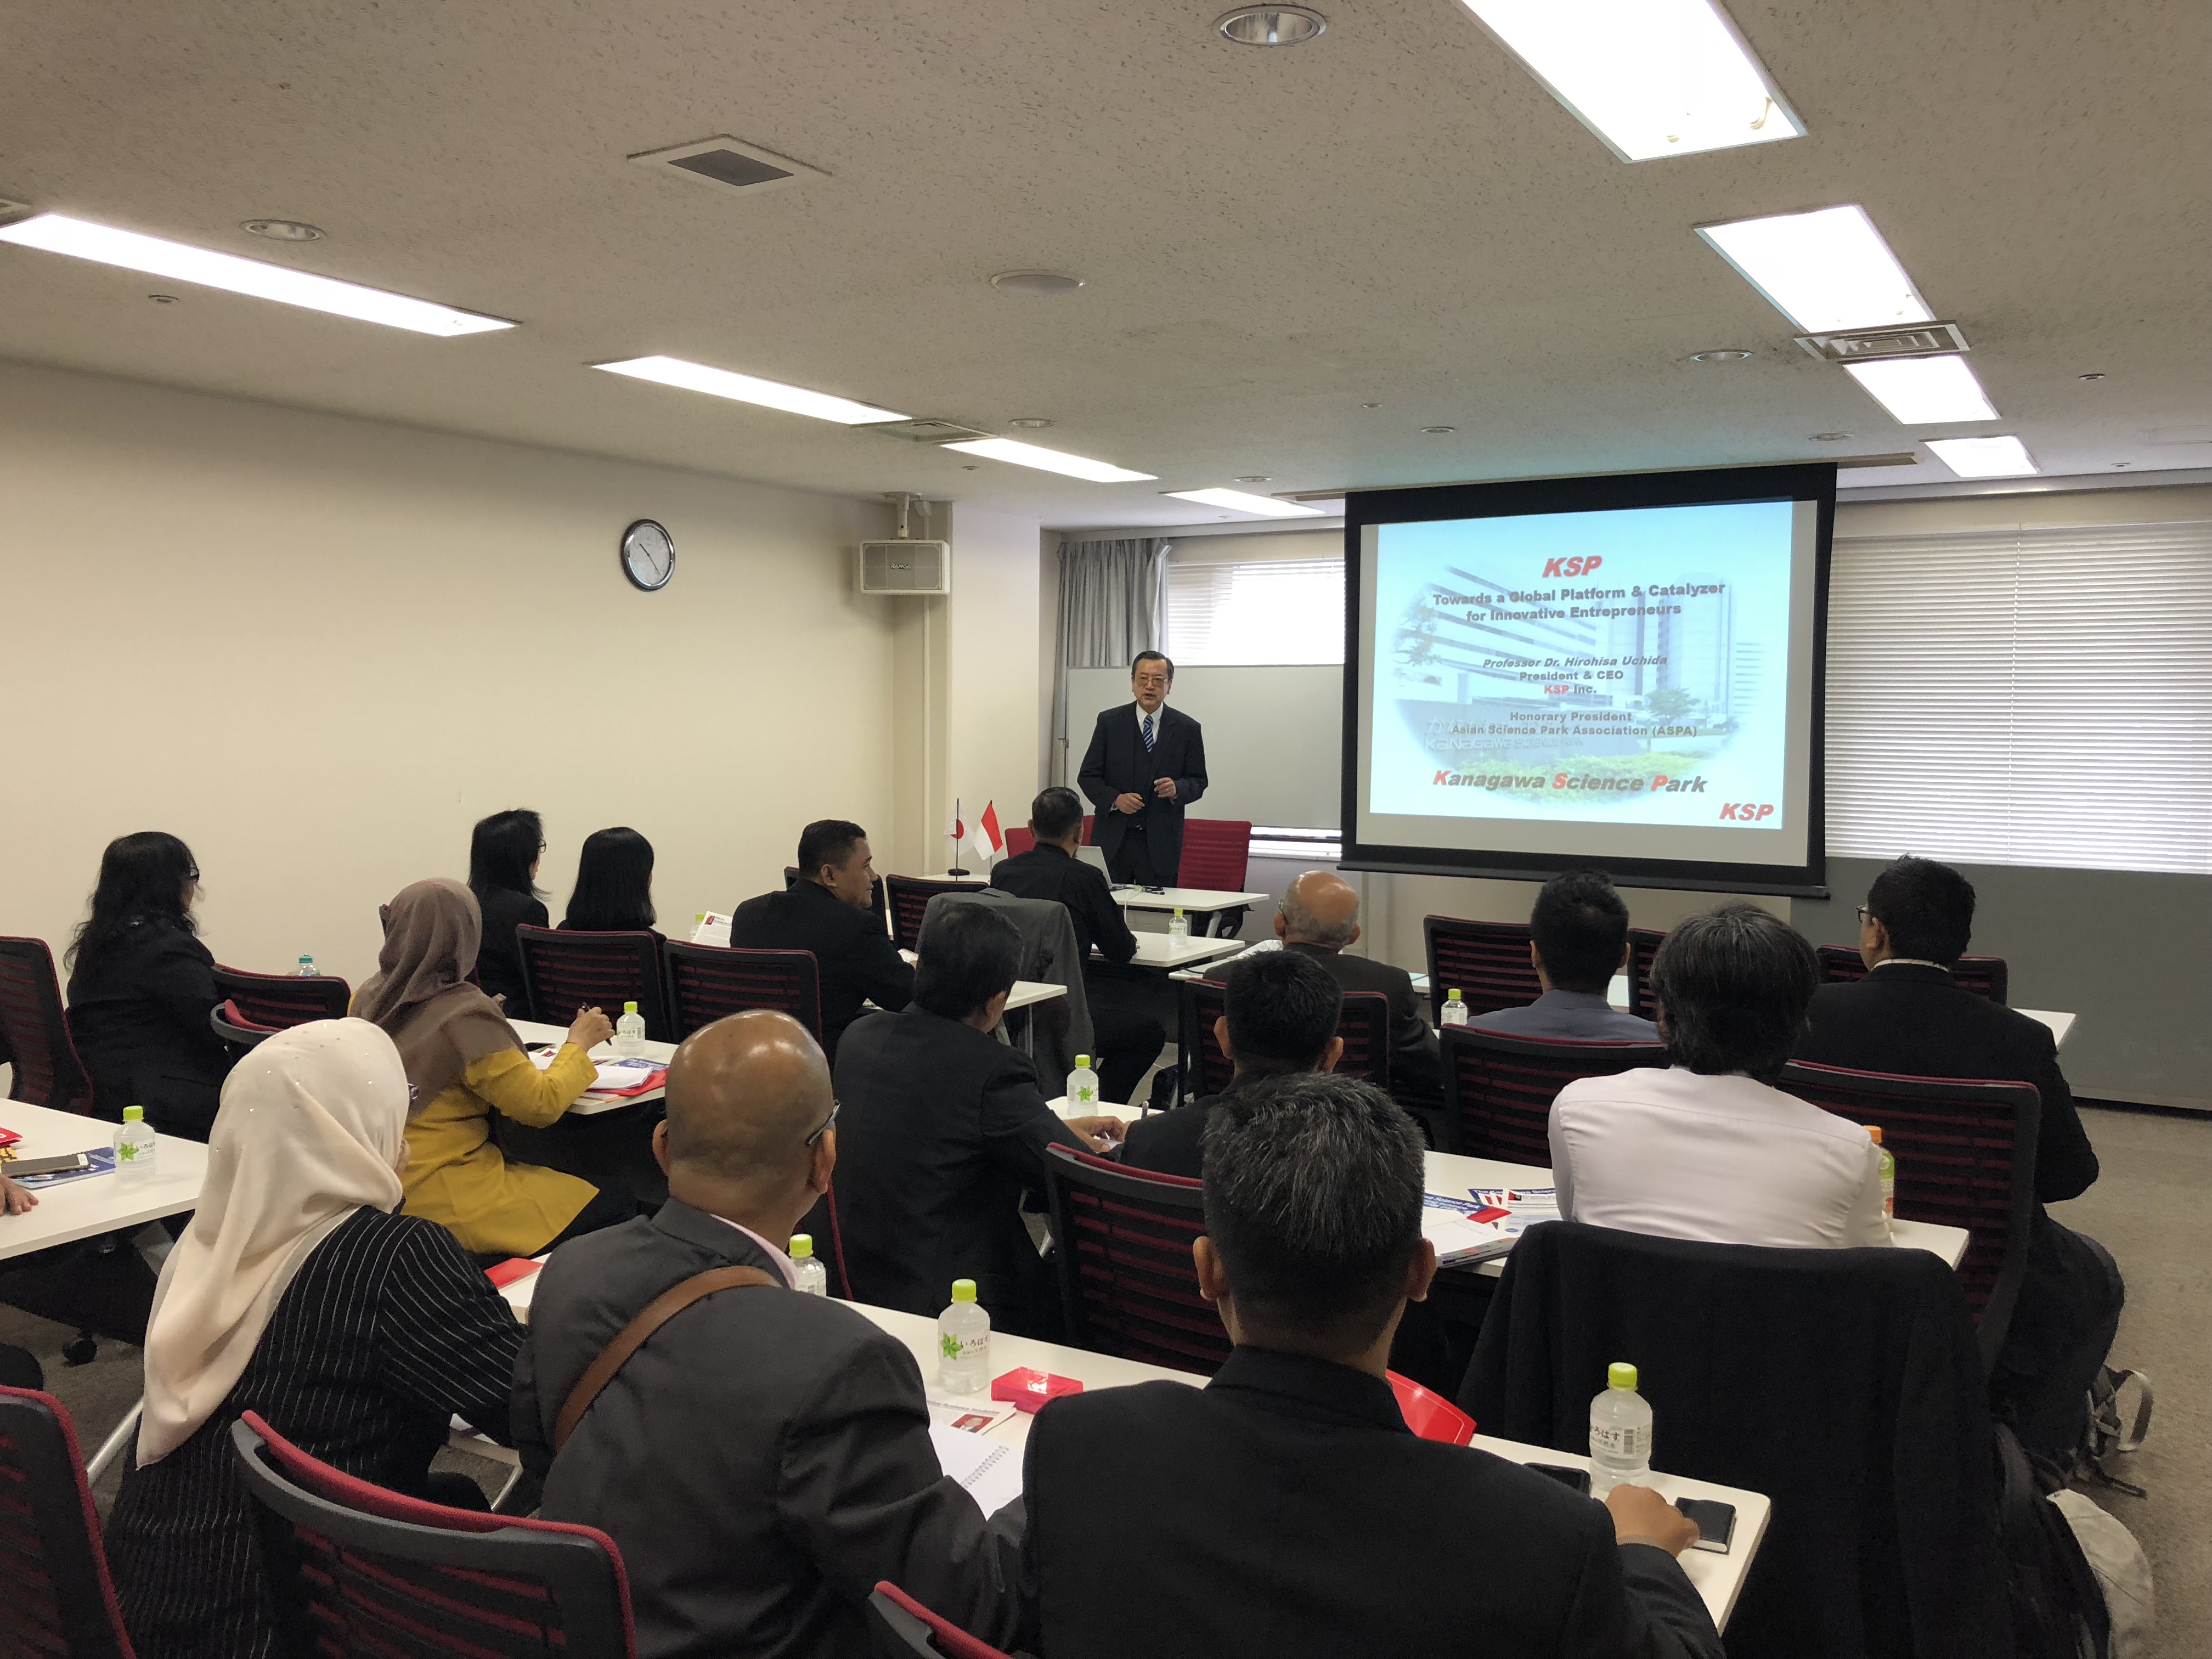 Indonesian Internship Training Group visited Kanagawa Science Park